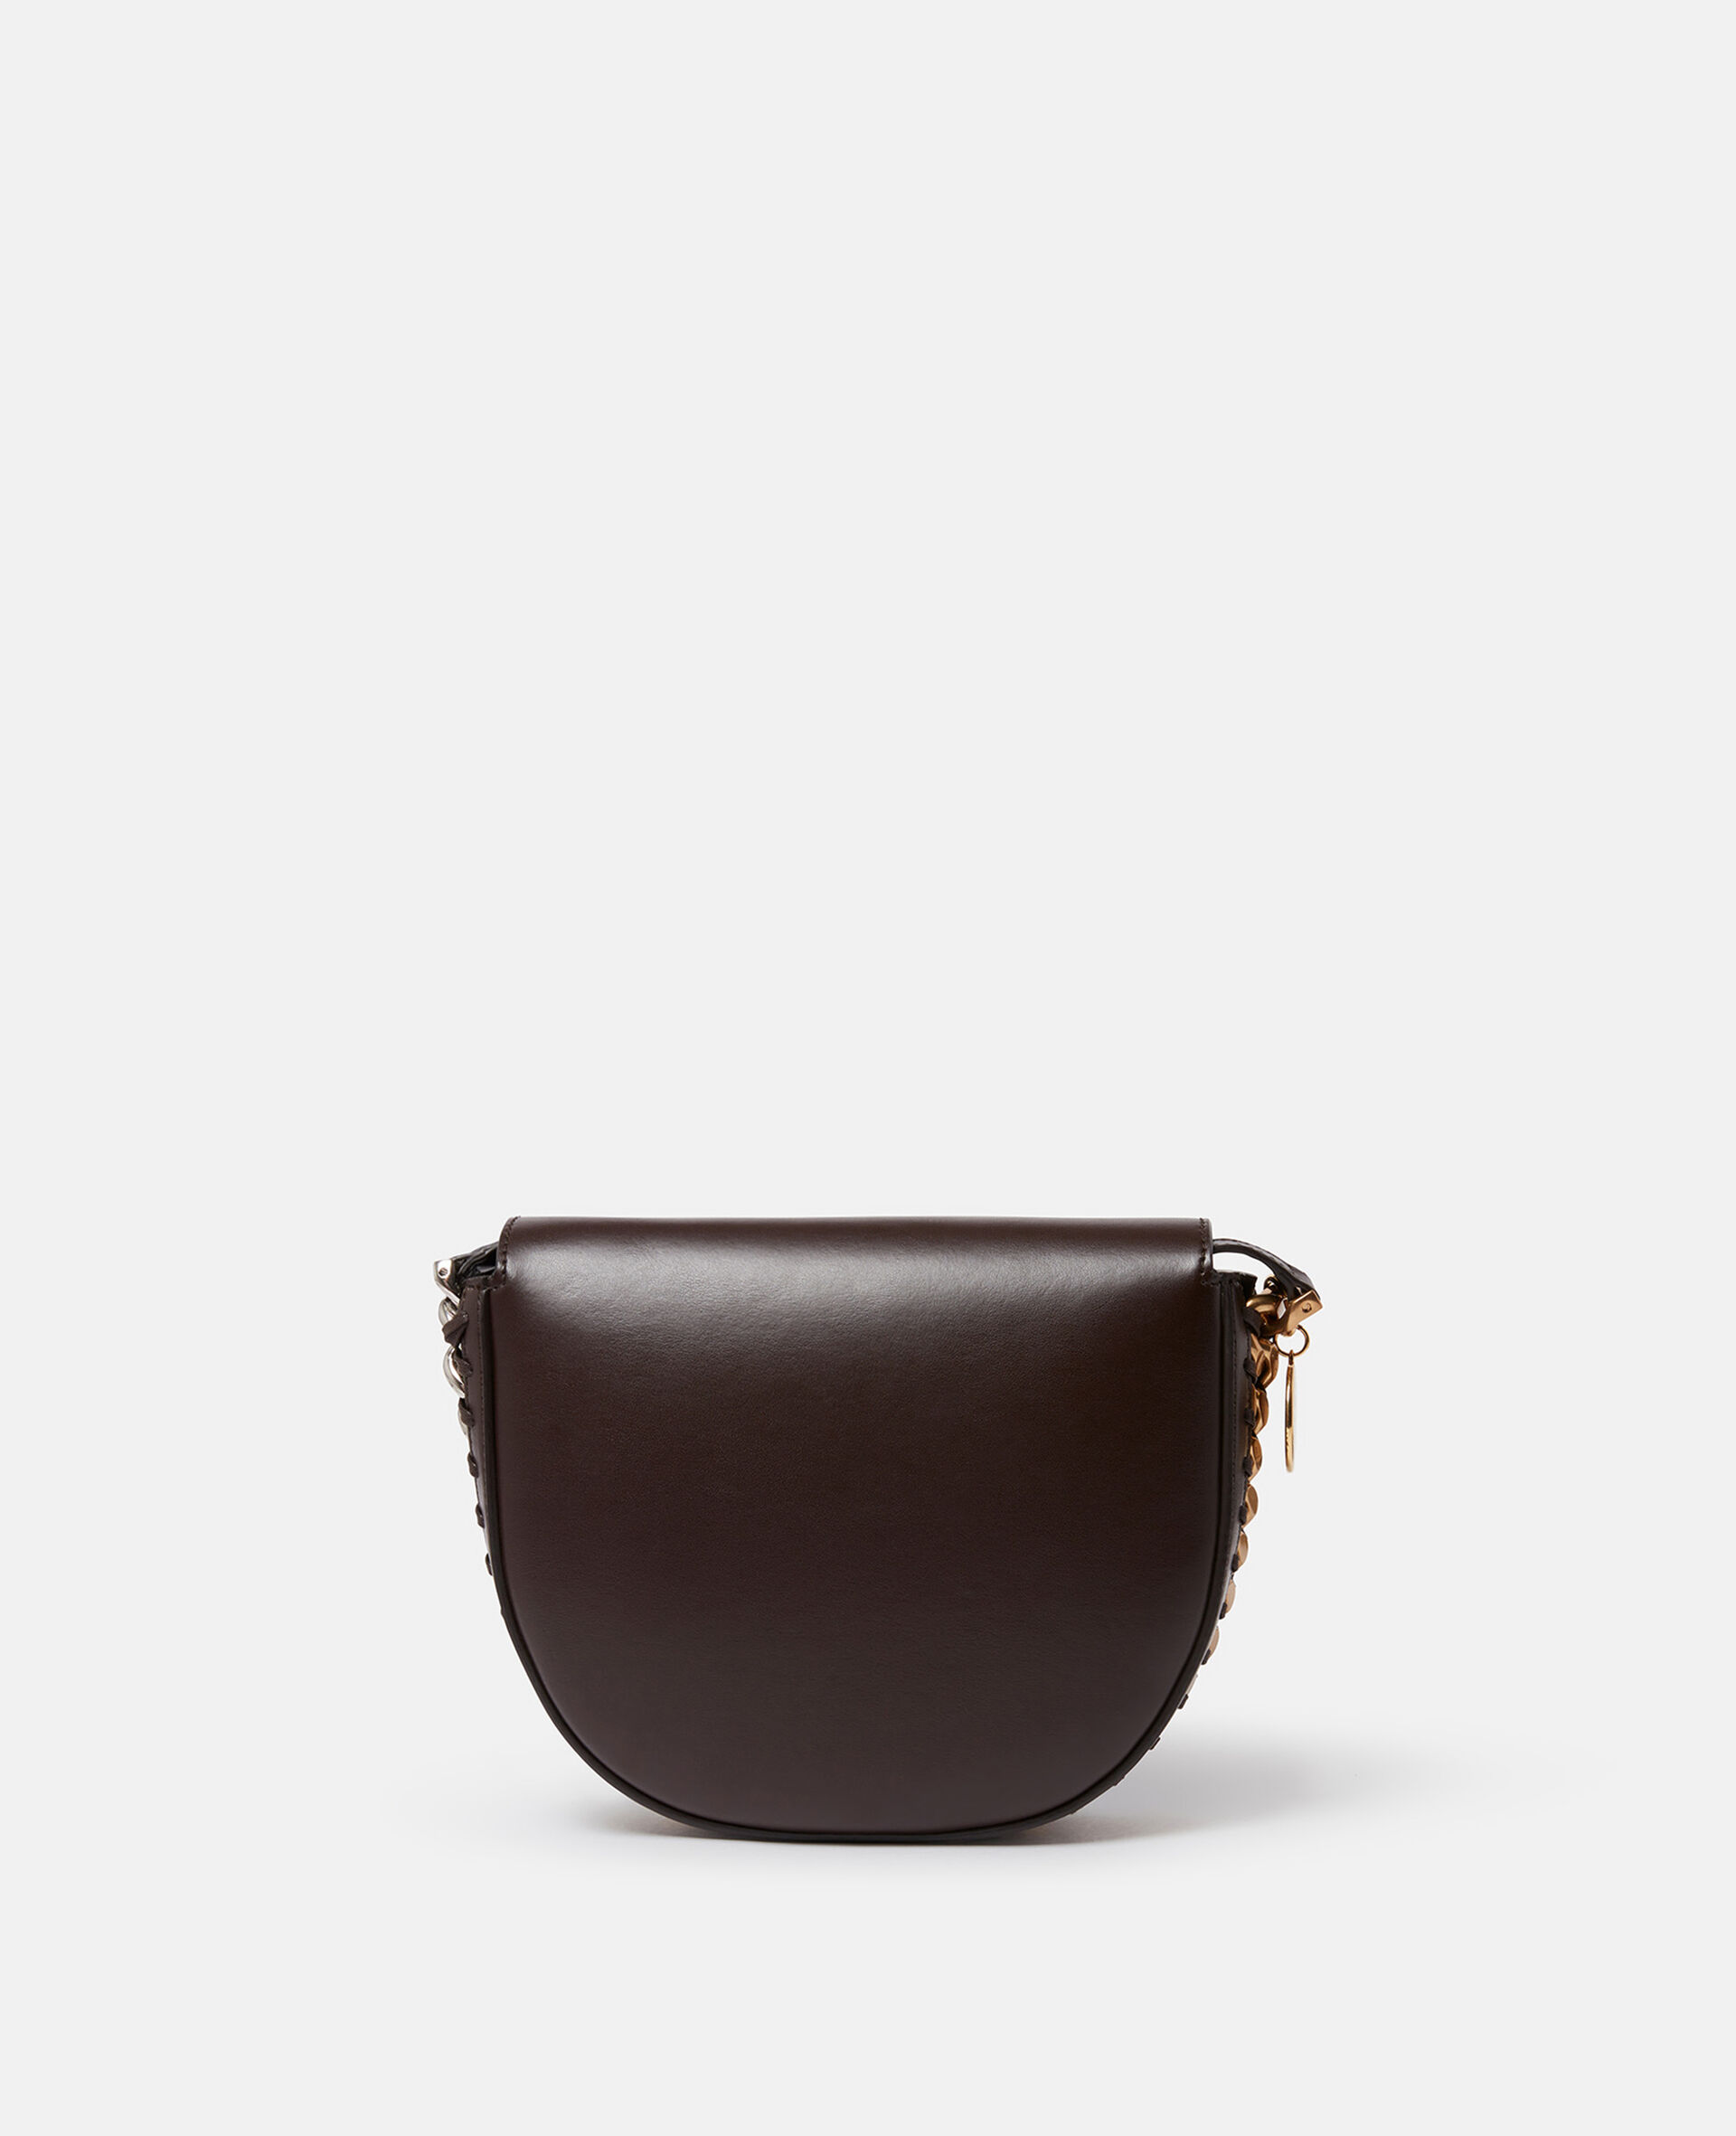 Stella McCartney Medium Flap Shoulder Bag in Chocolate Brown